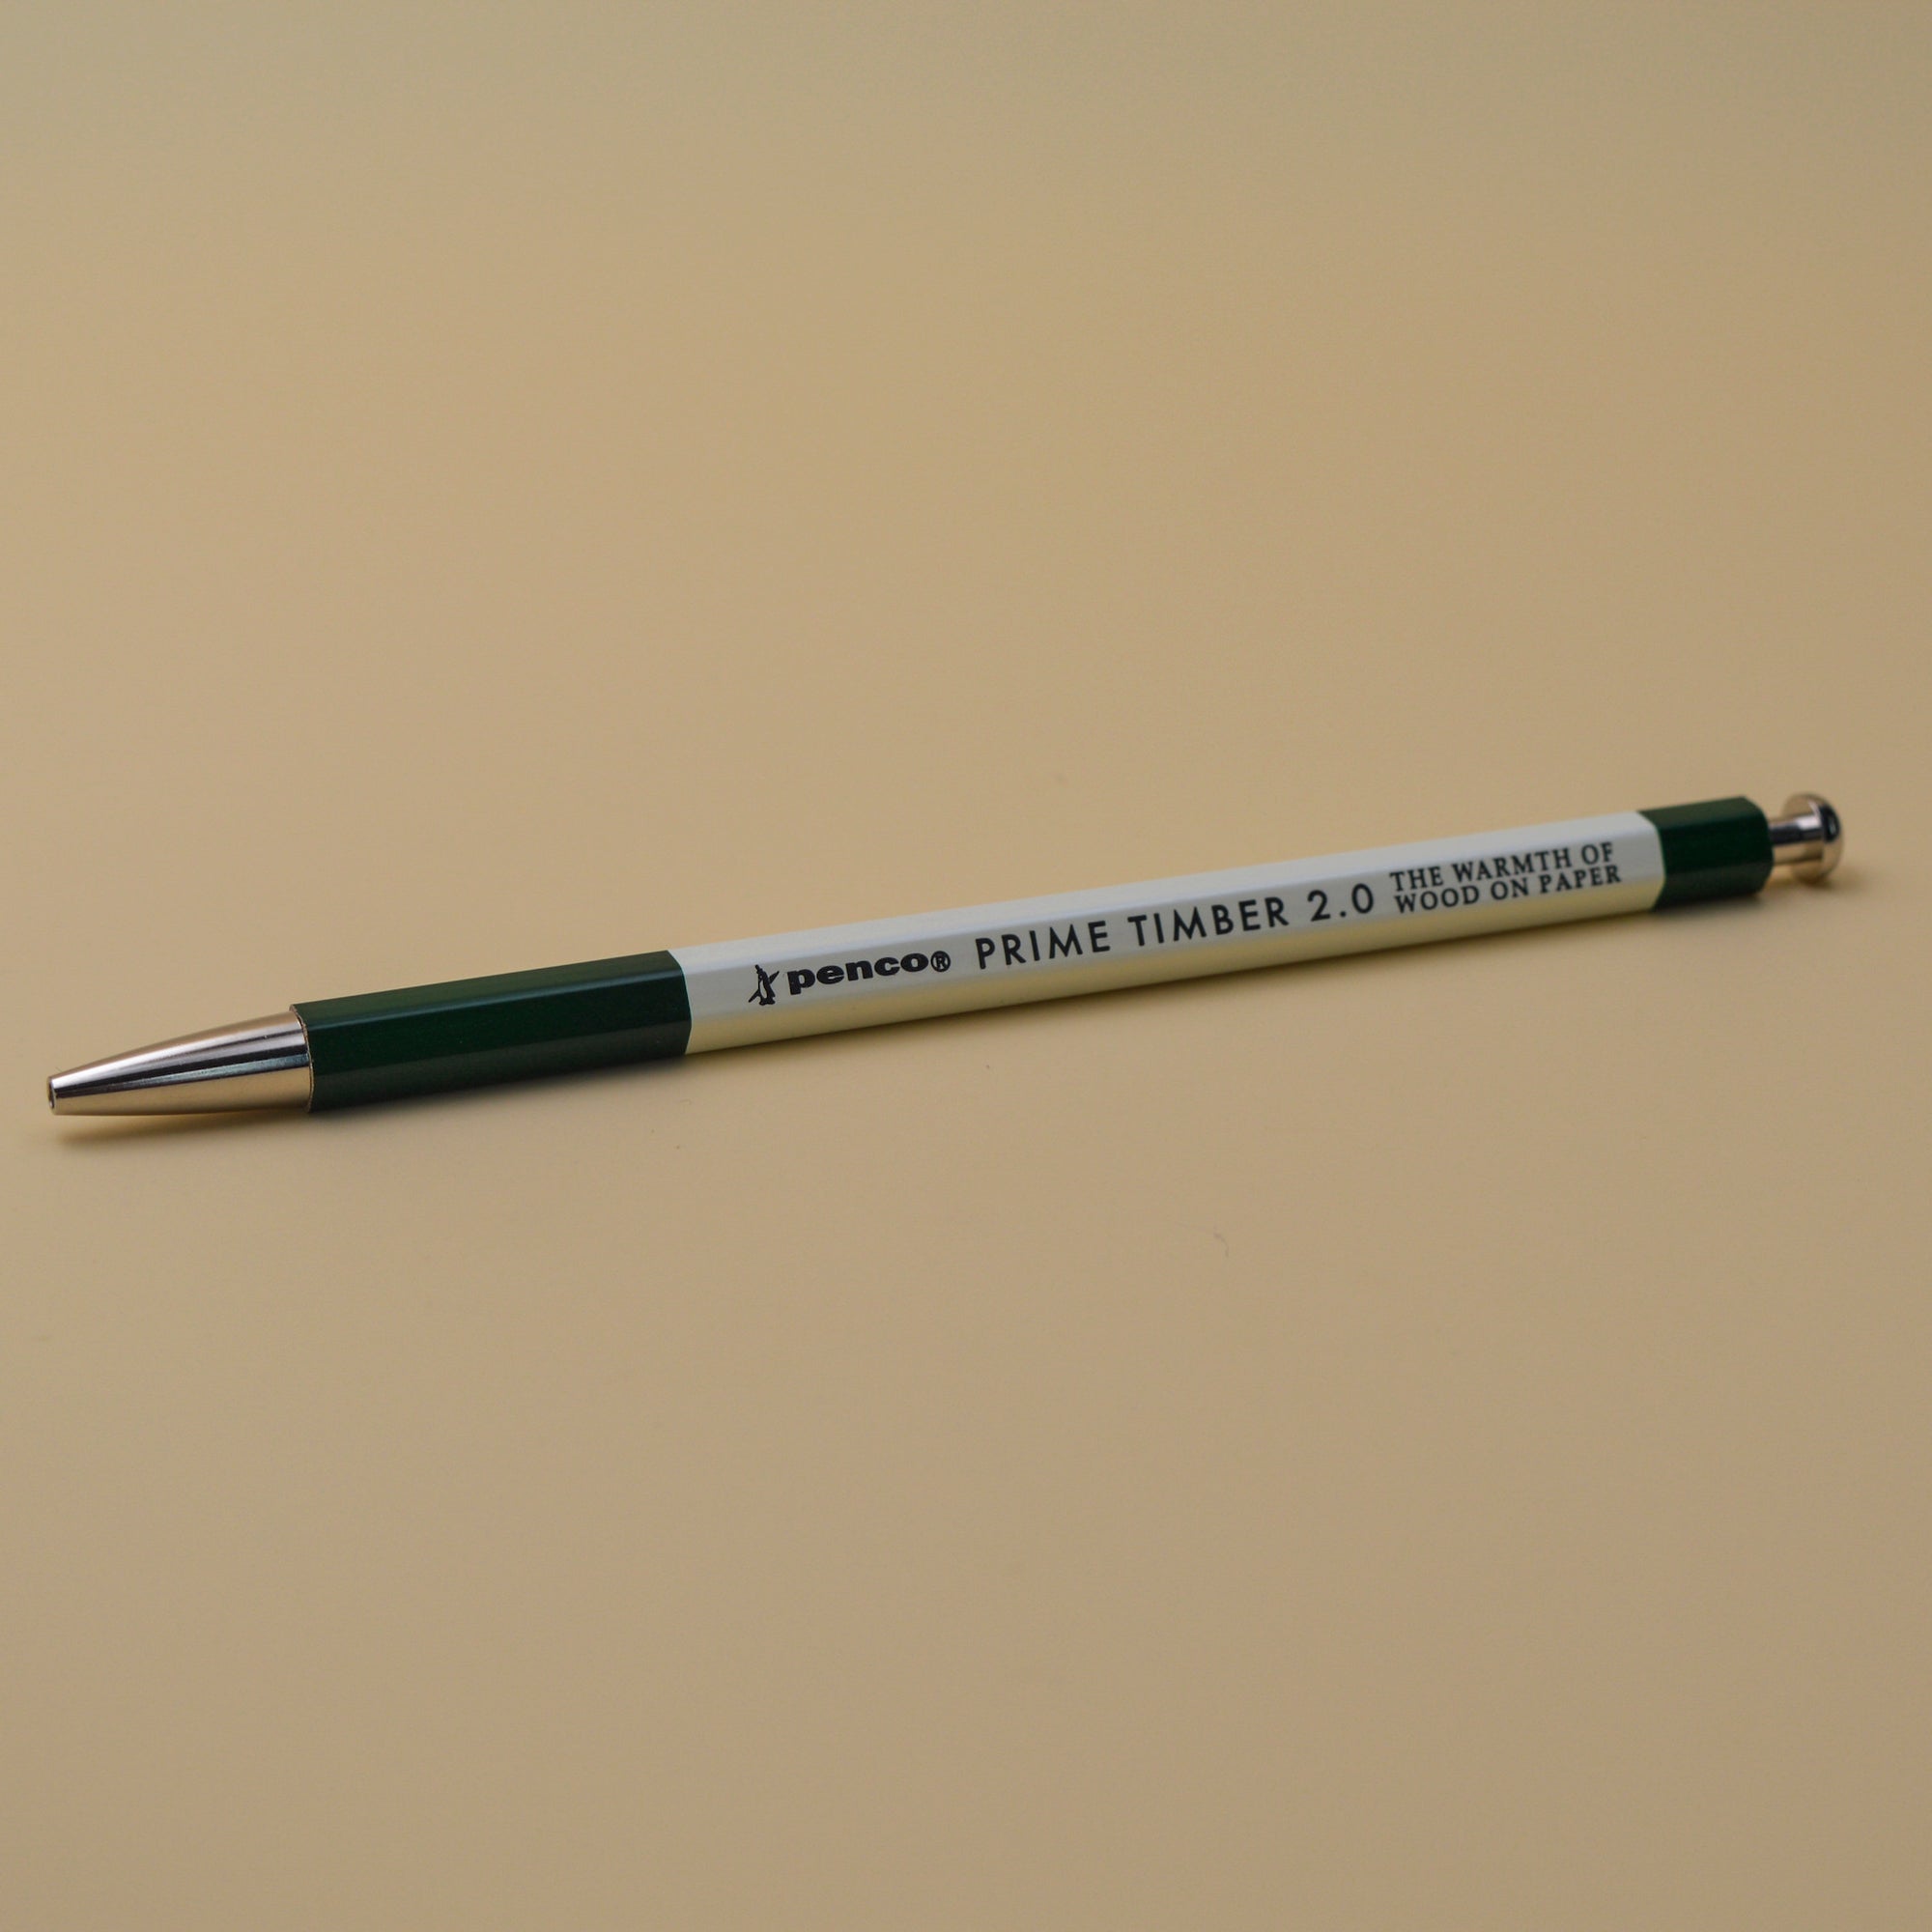 Hightide Penco Prime Timber Pencil